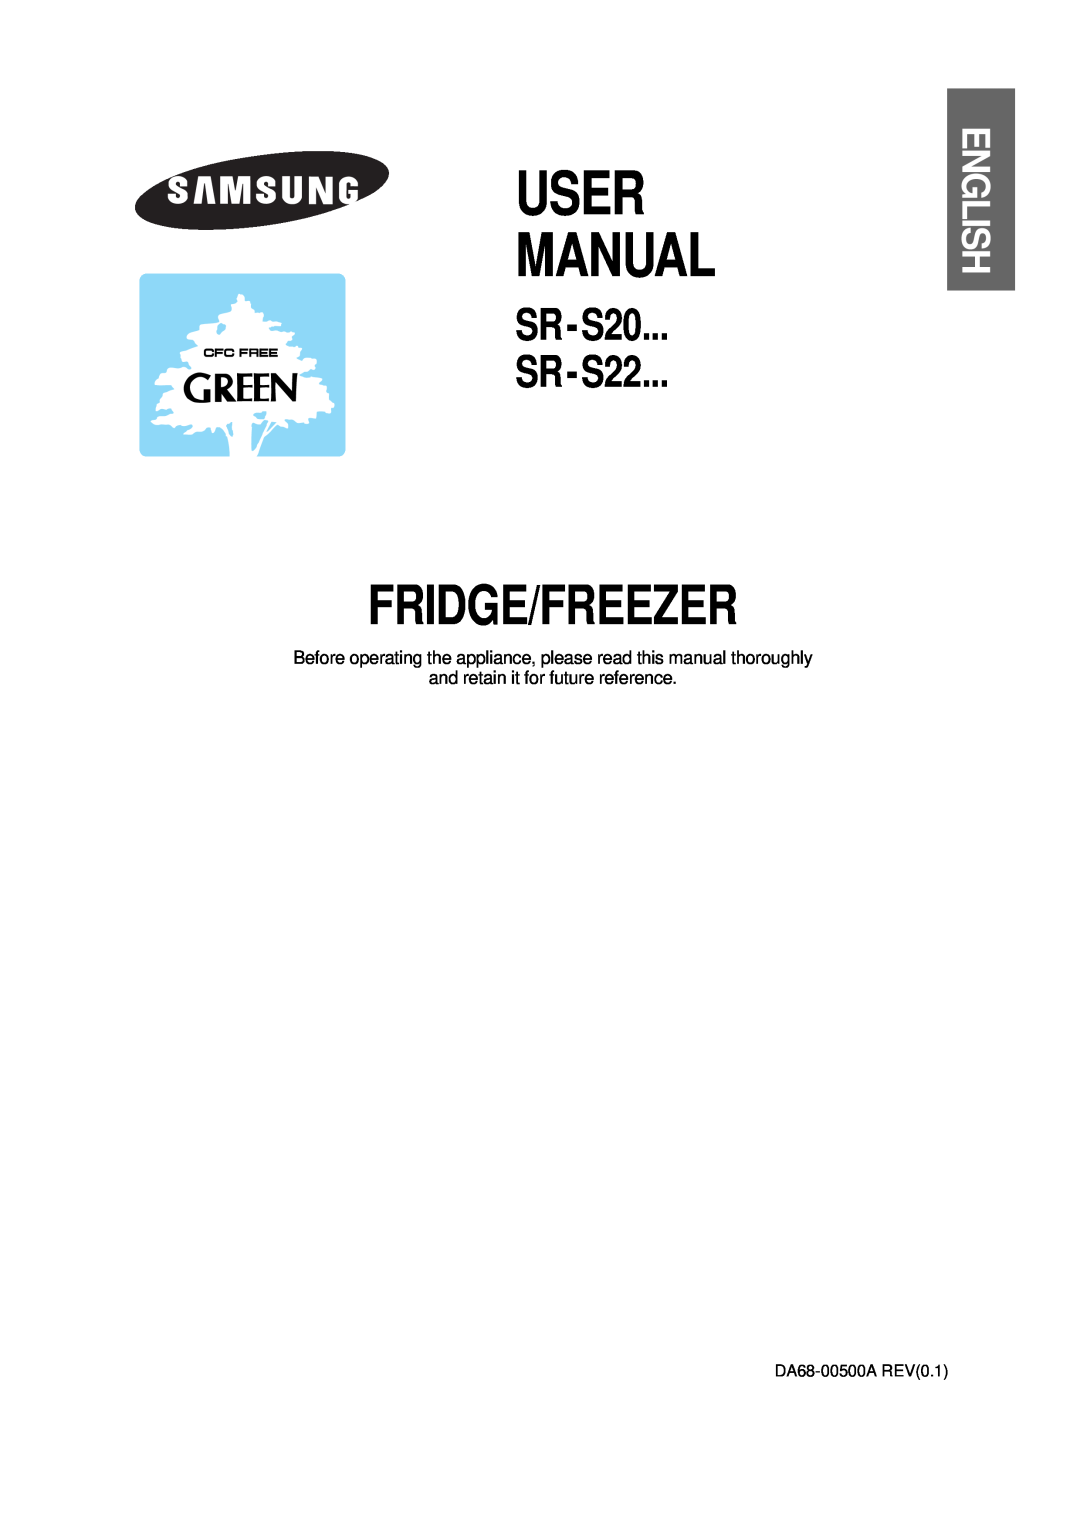 Samsung user manual Fridge/Freezer, SR-S20 SR-S22, English, DA68-00500A REV0.1 